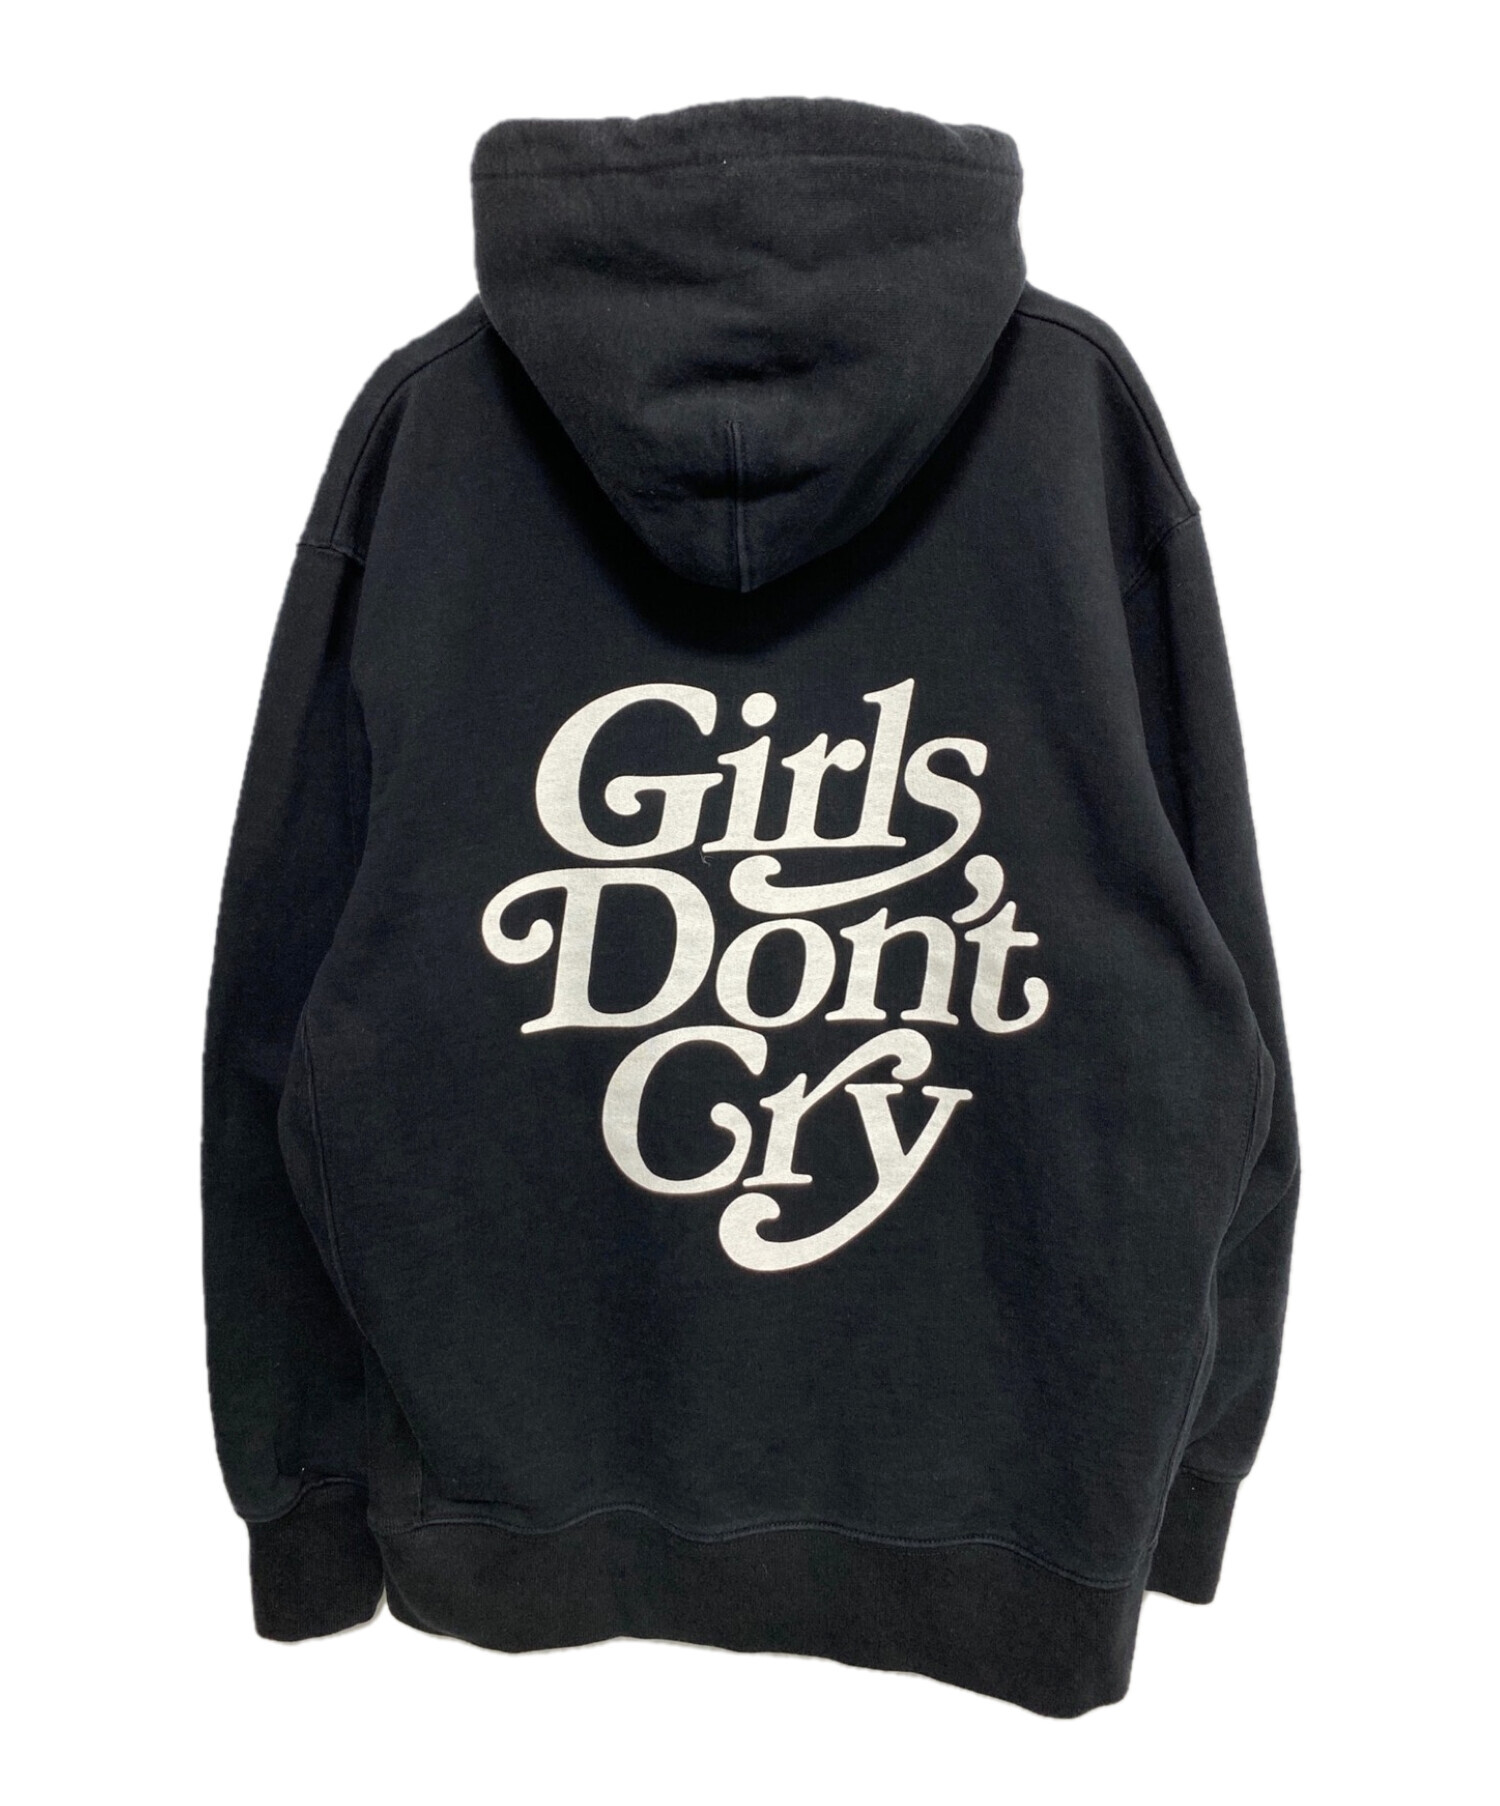 GIRLS DON'T CRY (ガールズドントクライ) Hooded Sweatshirt ブラック サイズ:XL